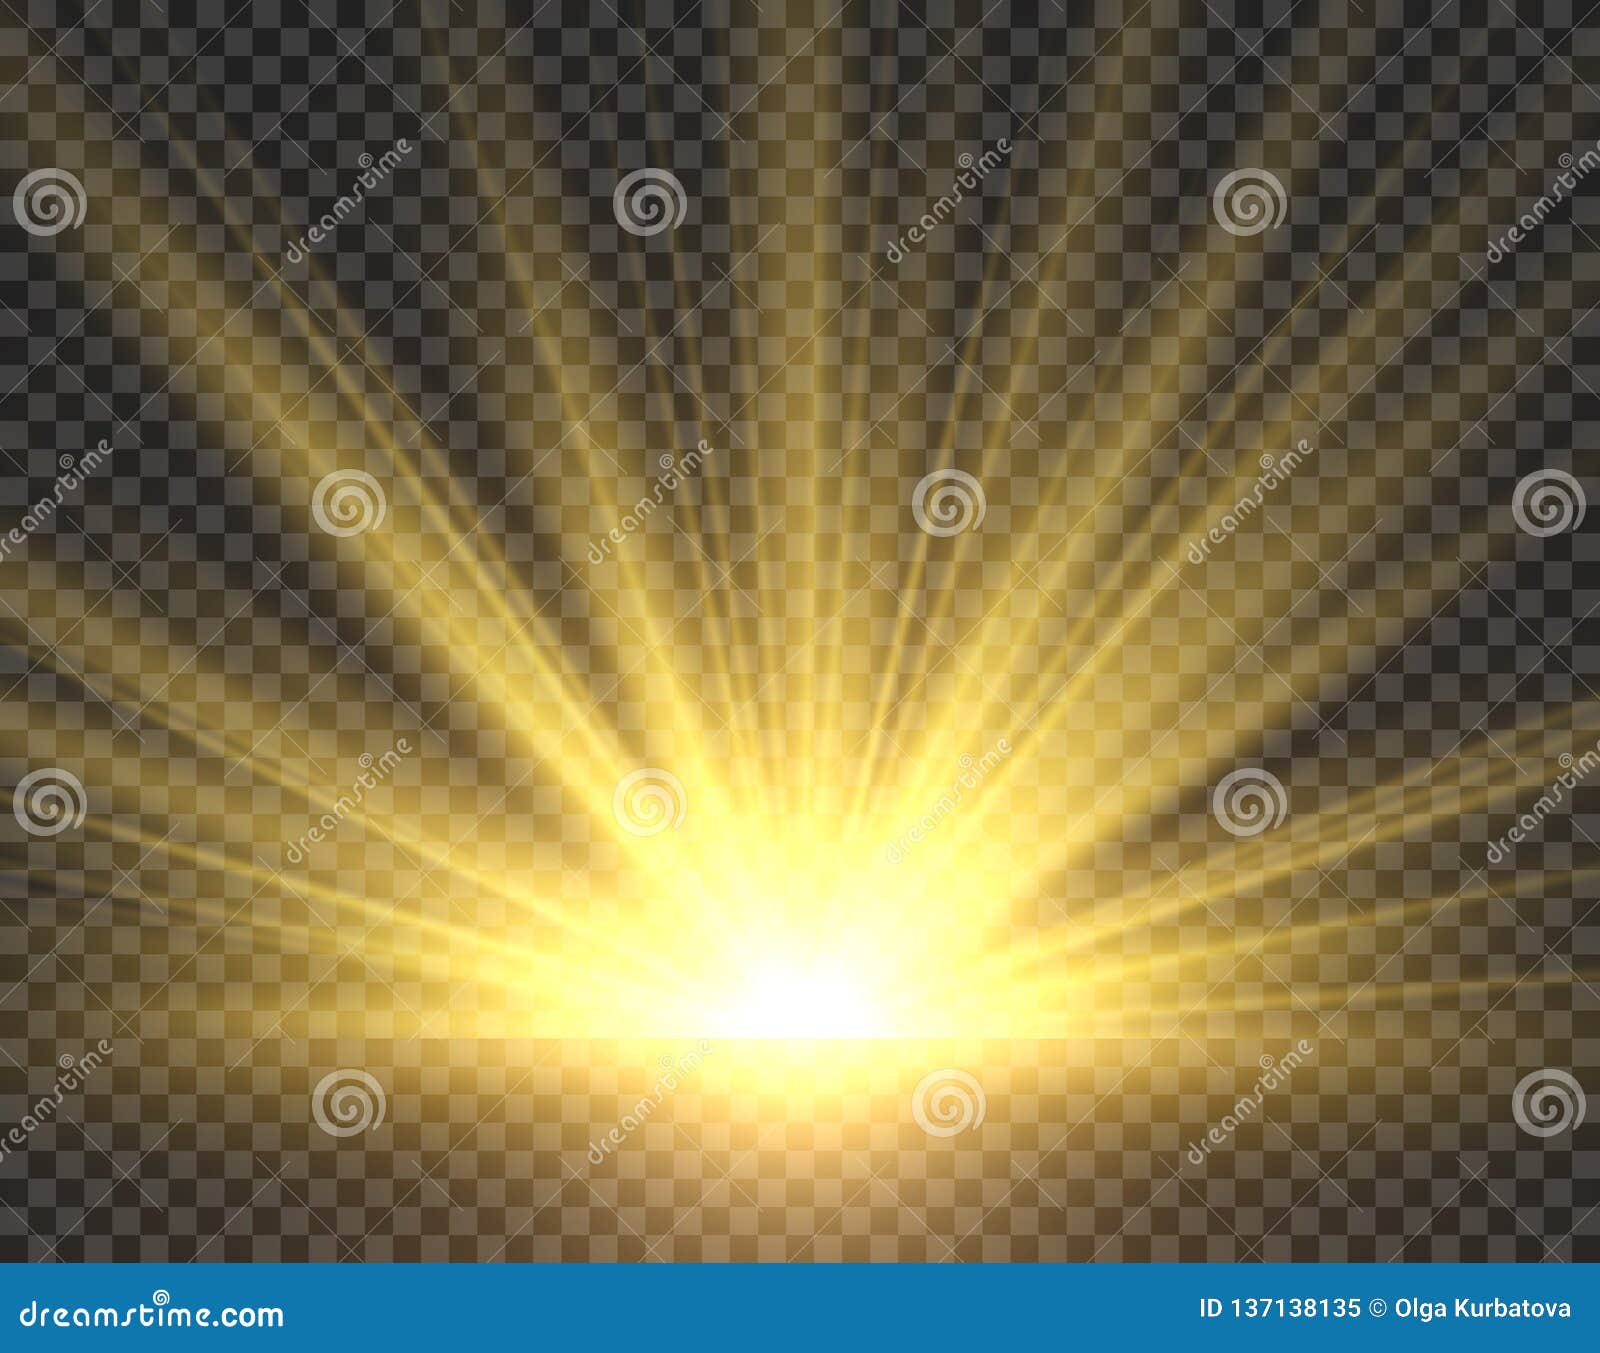 sunlight . golden sun rays radiance. yellow bright spotlight transparent sunshine starburst  